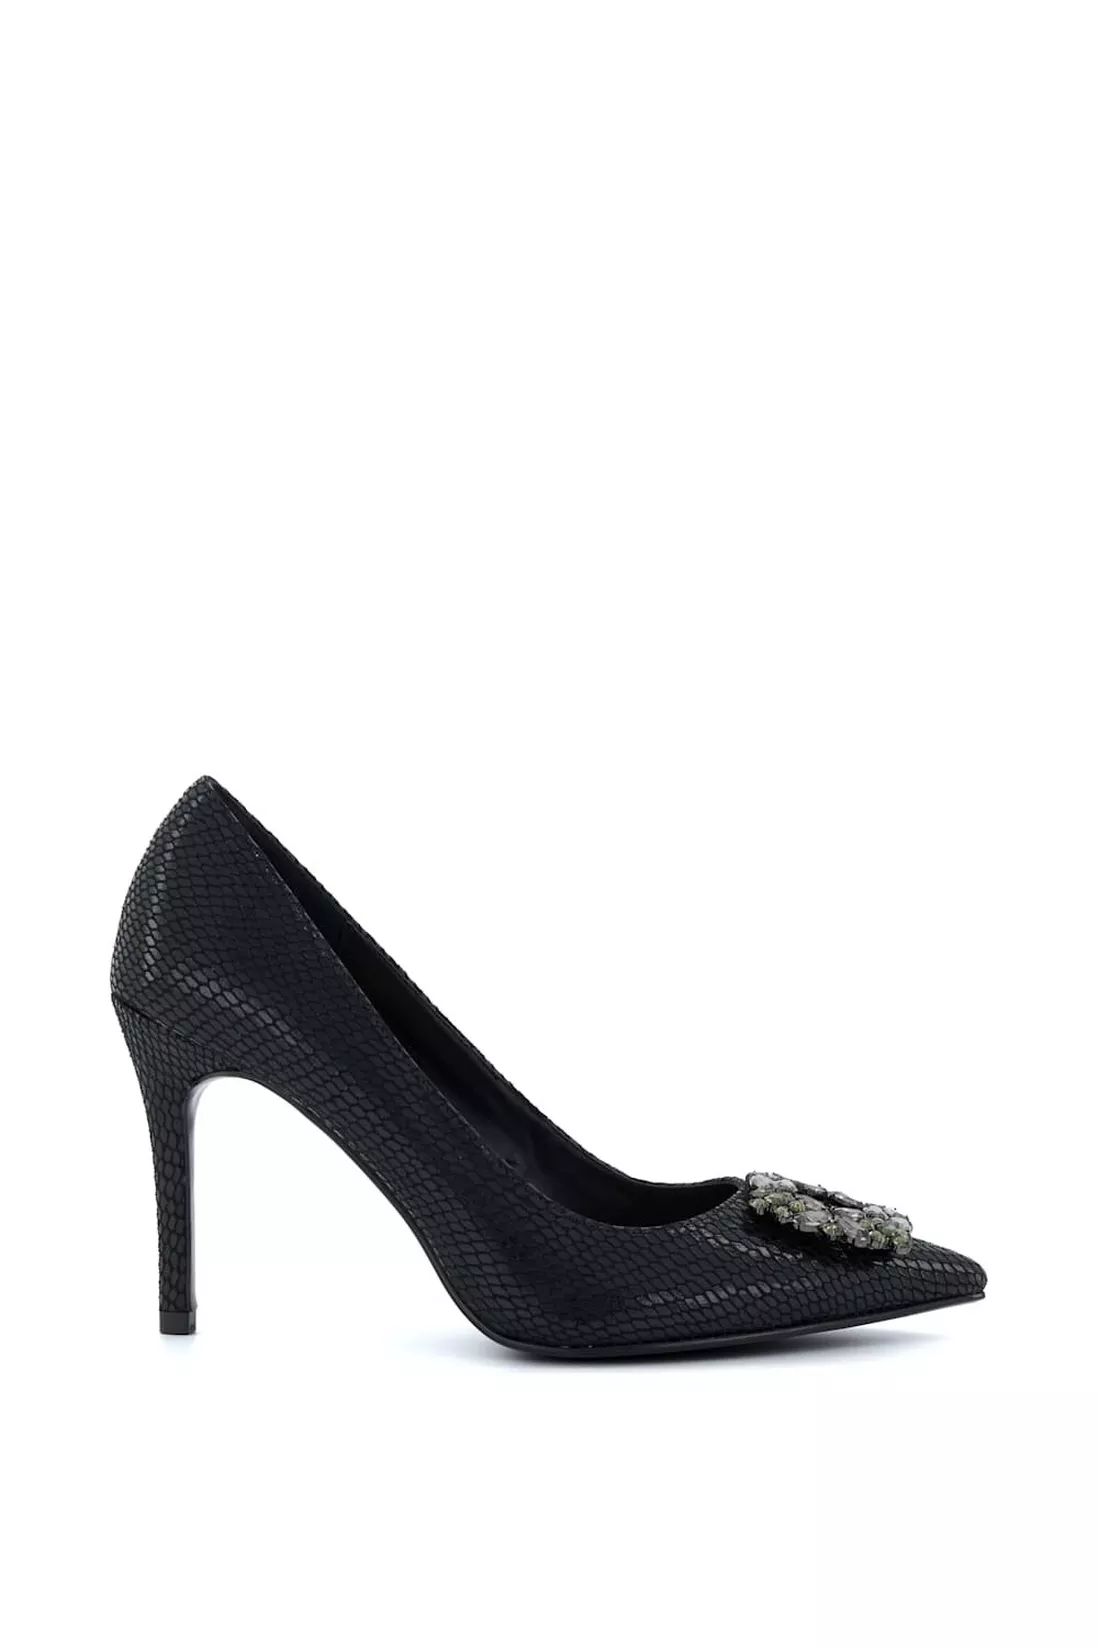 Heels | 'Beeta' Court Shoes | Dune London | Debenhams UK